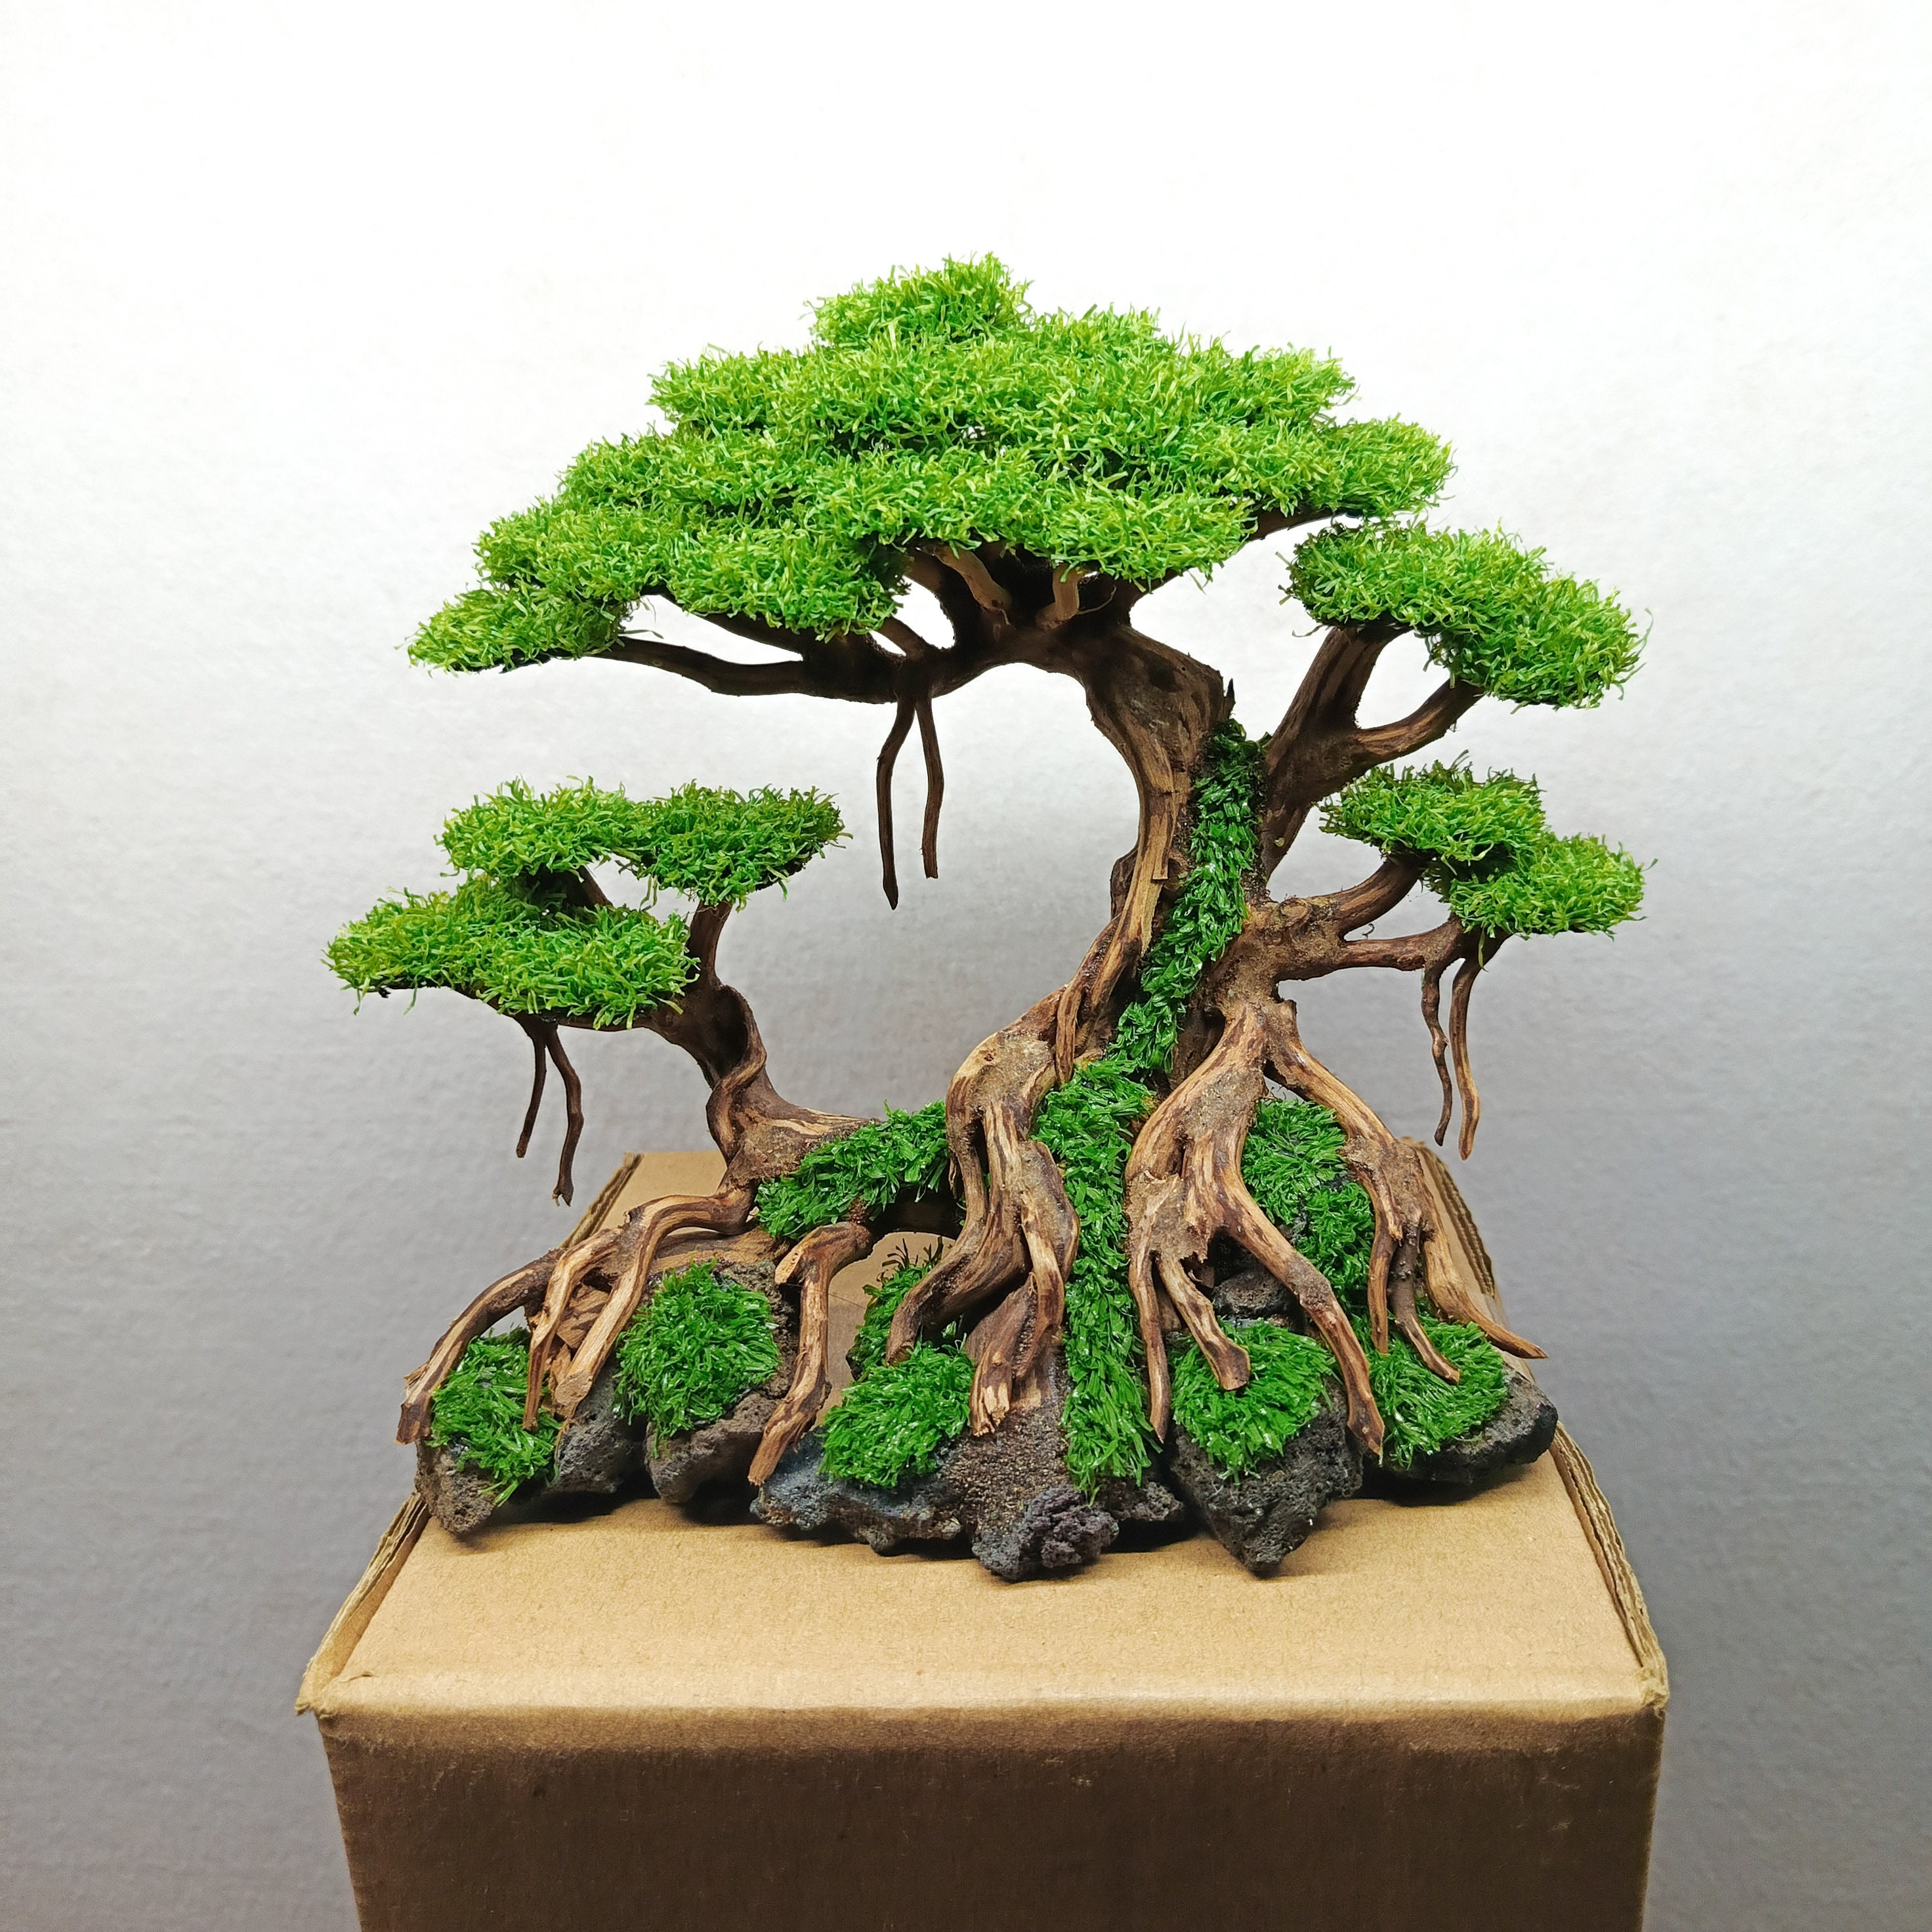 Buy an artificial Bonsai tree from LeopoldFlora